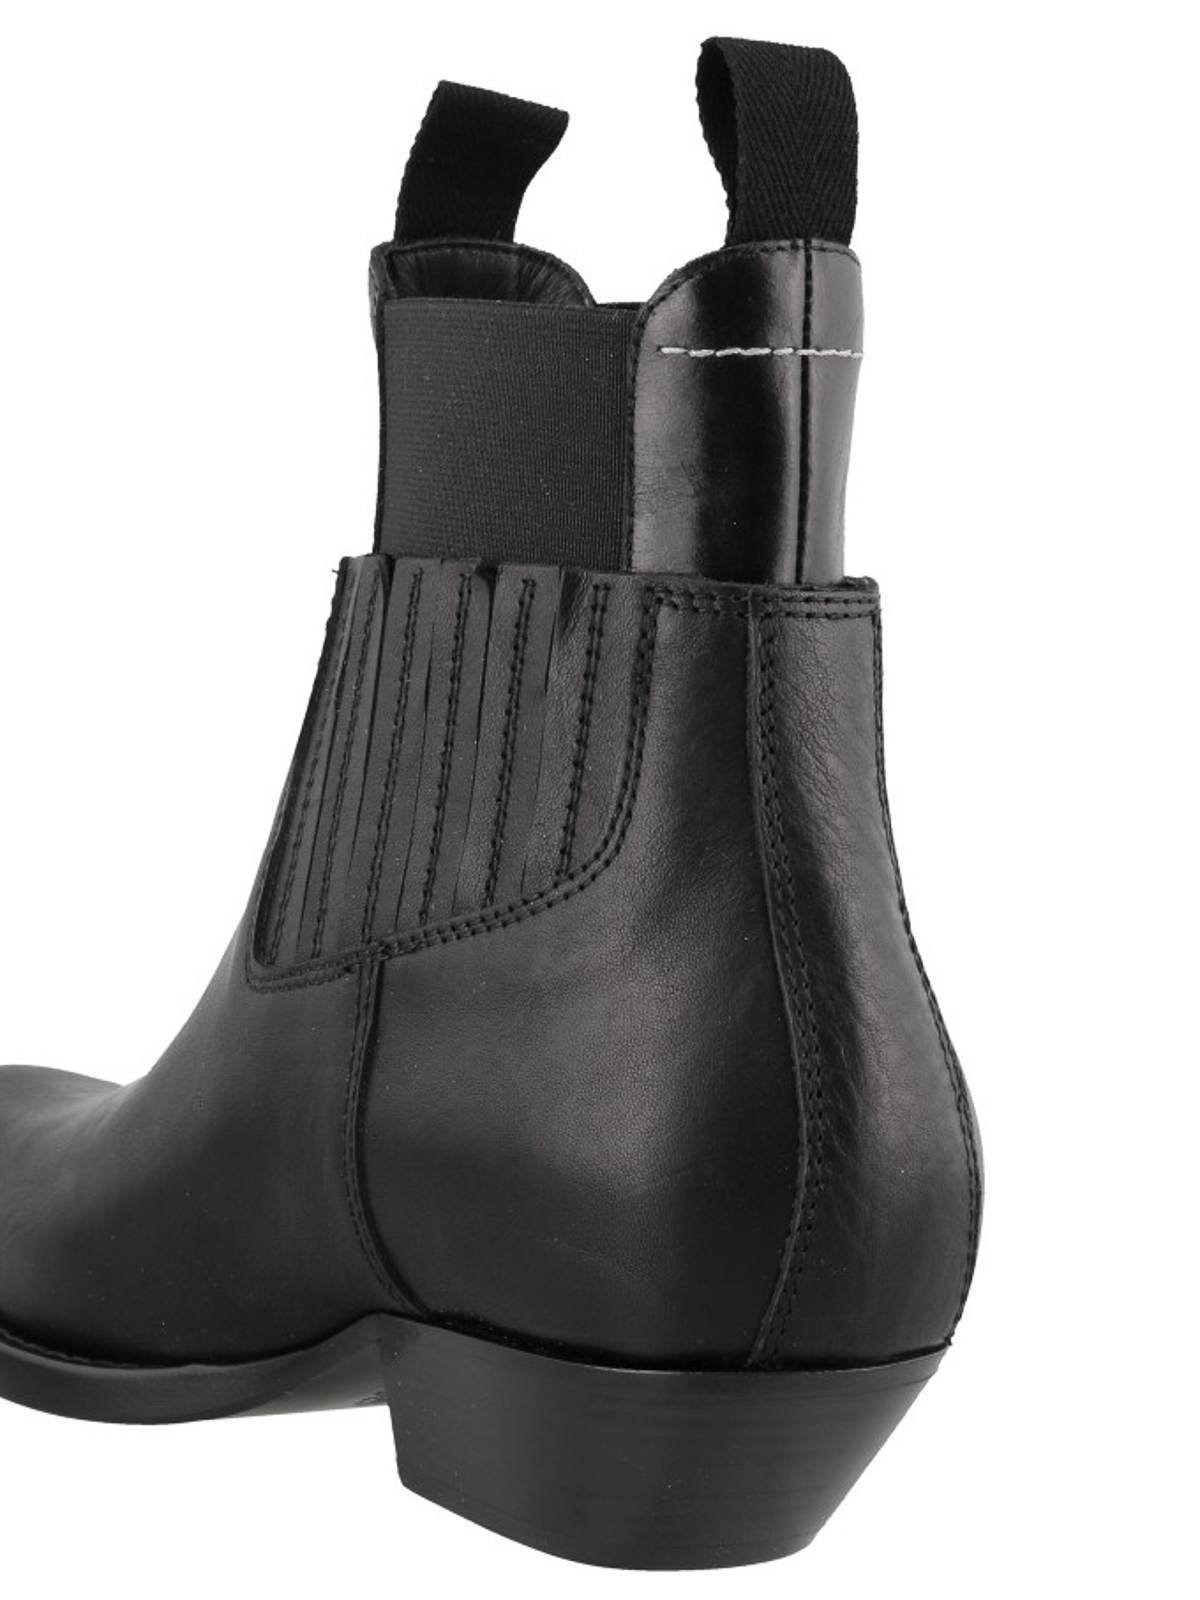 ankle boots shop online